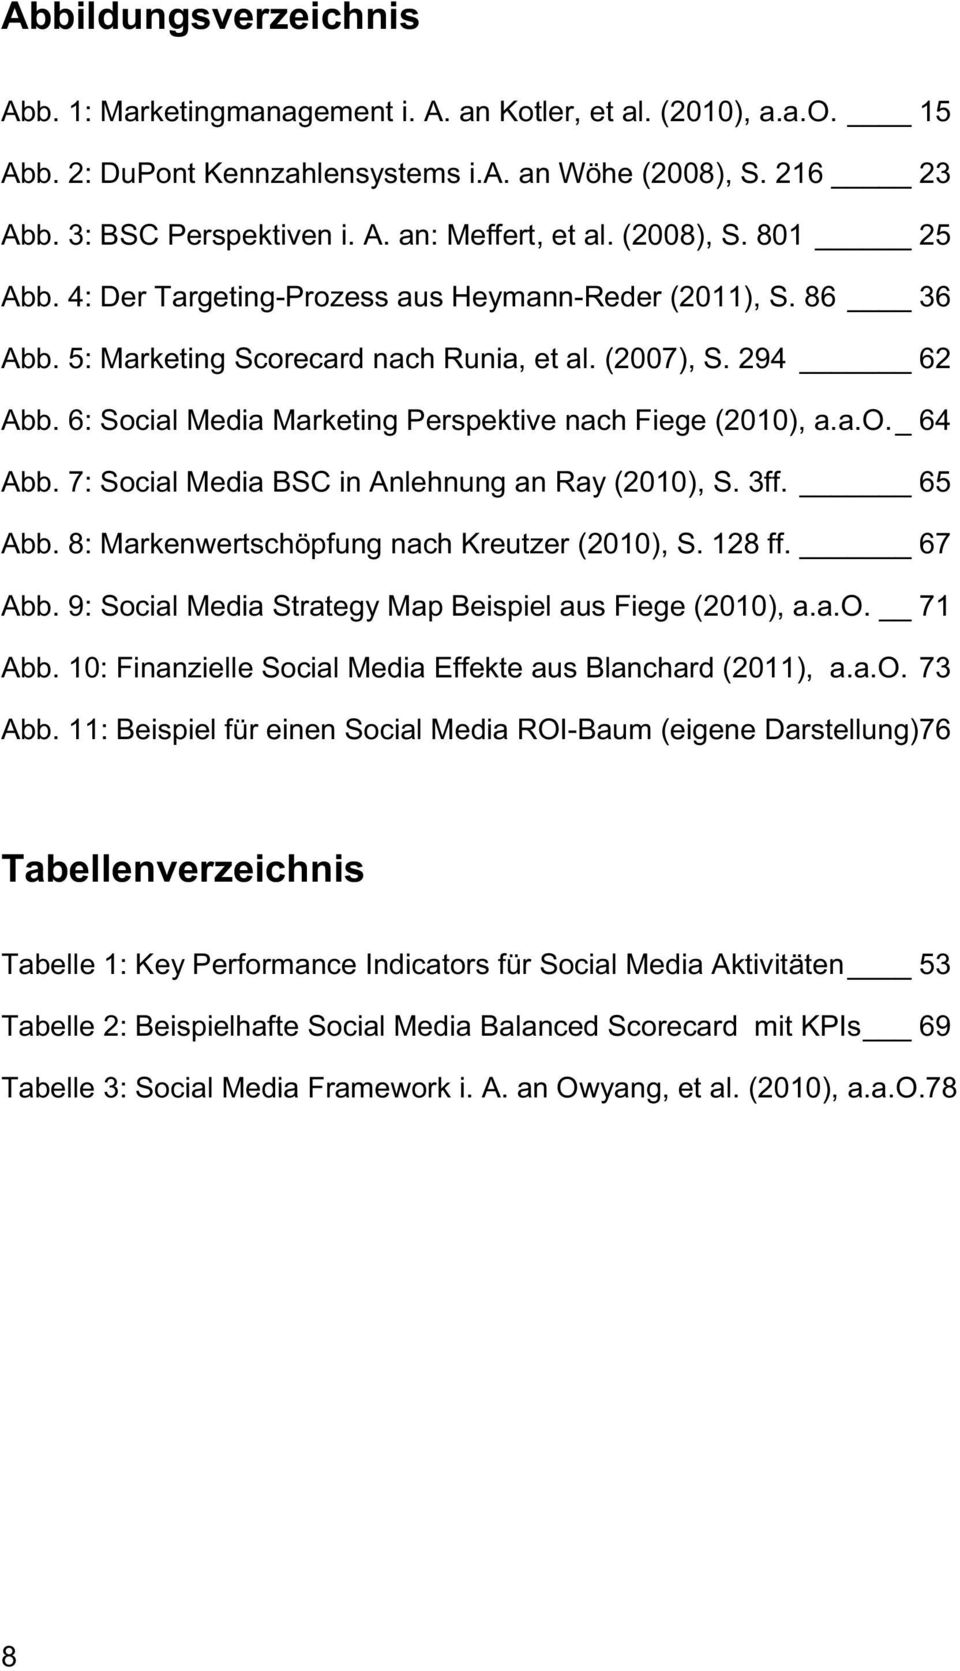 6: Social Media Marketing Perspektive nach Fiege (2010), a.a.o._ 64 Abb. 7: Social Media BSC in Anlehnung an Ray (2010), S. 3ff. 65 Abb. 8: Markenwertschöpfung nach Kreutzer (2010), S. 128 ff. 67 Abb.